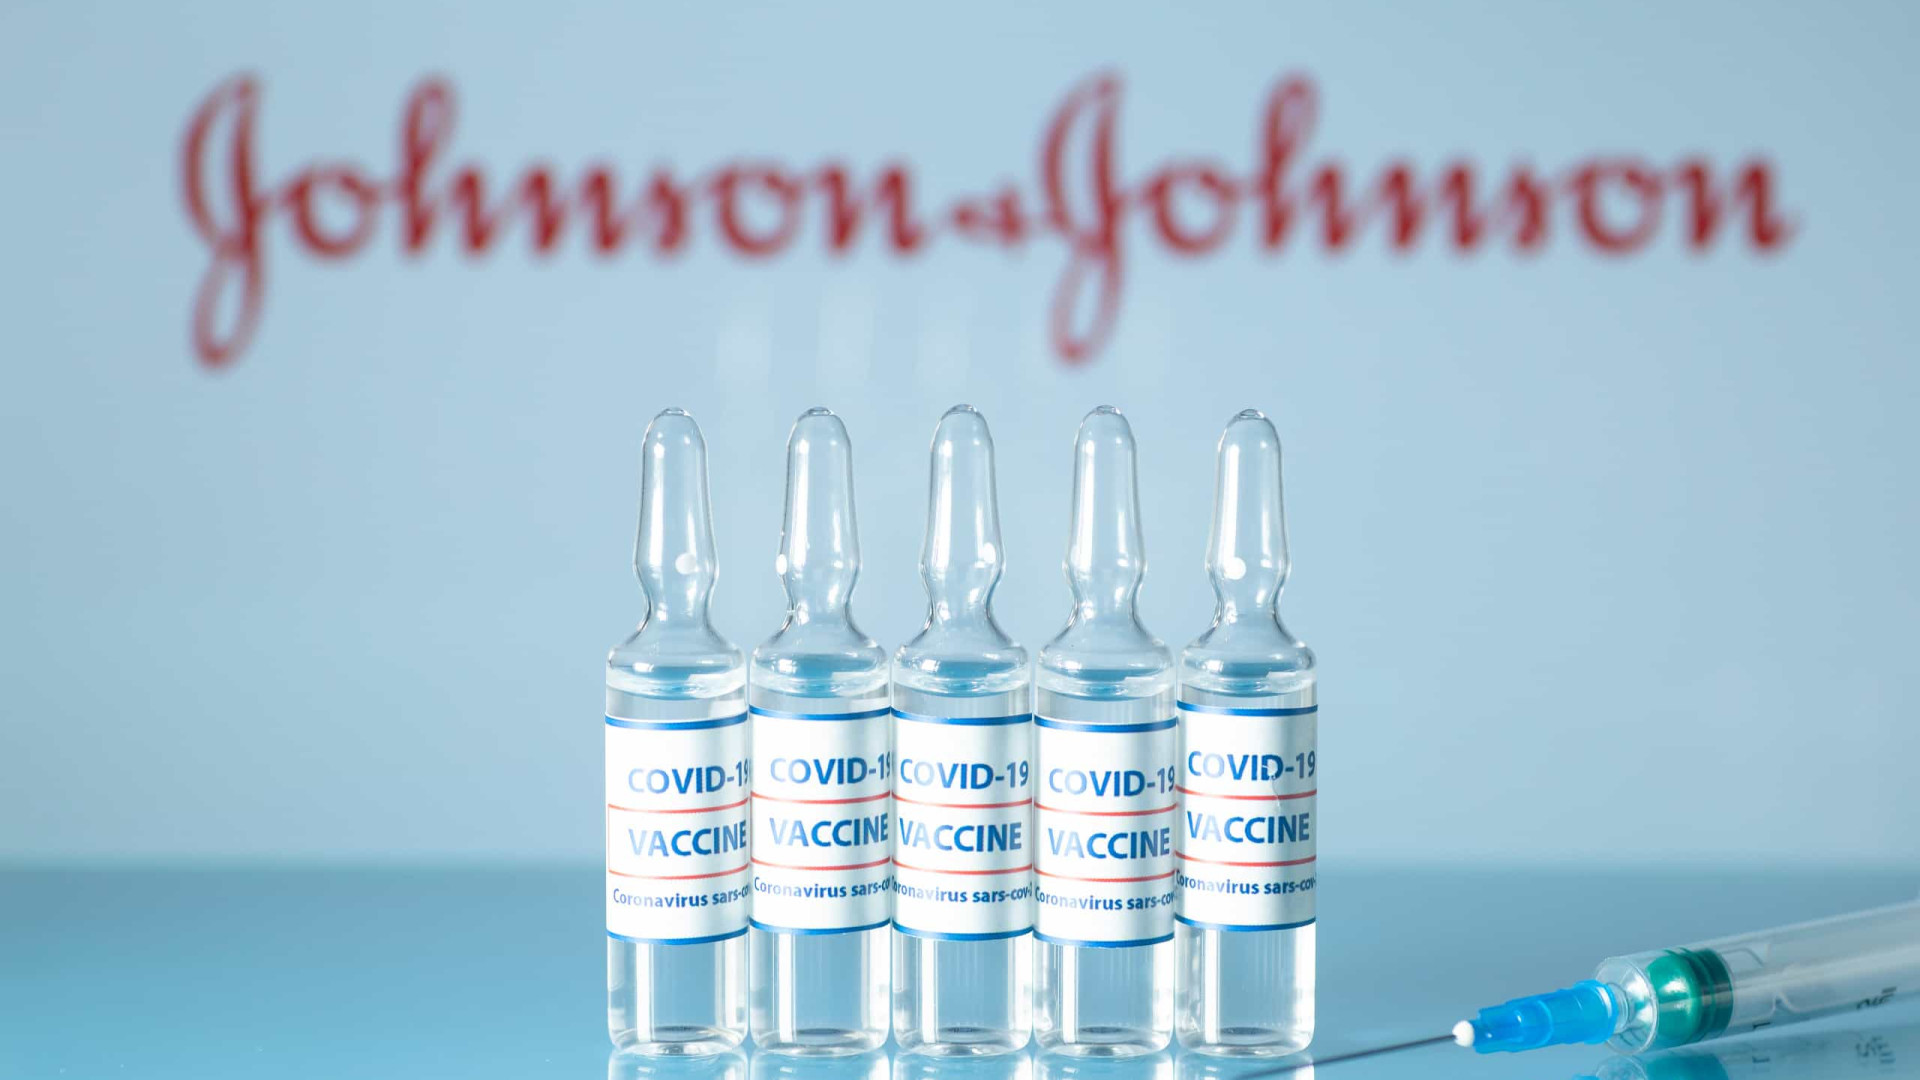 Vacina da Johnson & Johnson é segura e produz resposta imune, aponta estudo